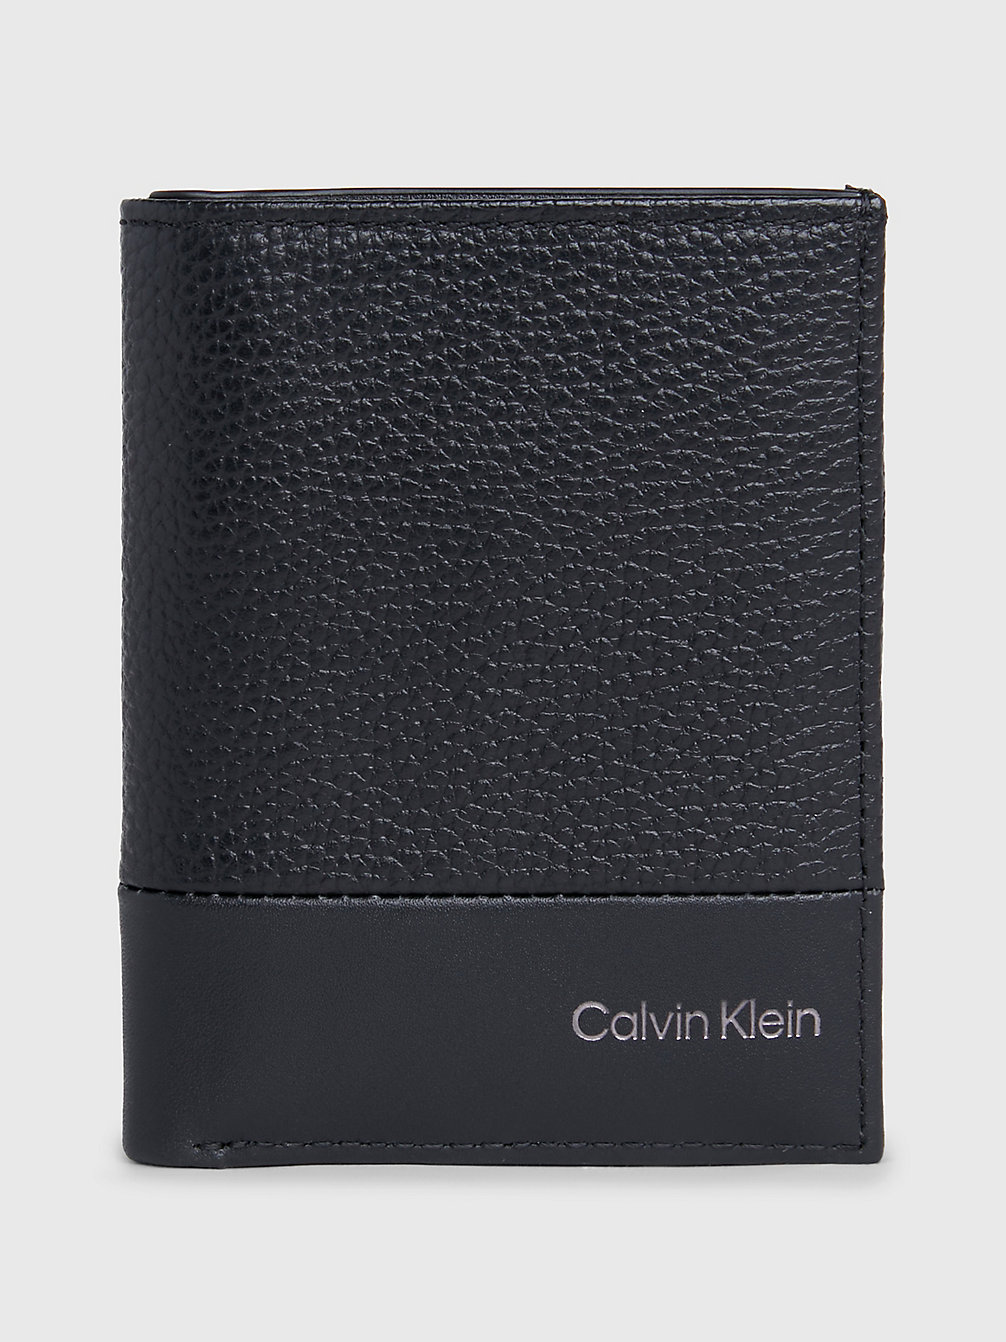 CK BLACK Leather Rfid Slimfold Wallet undefined Men Calvin Klein